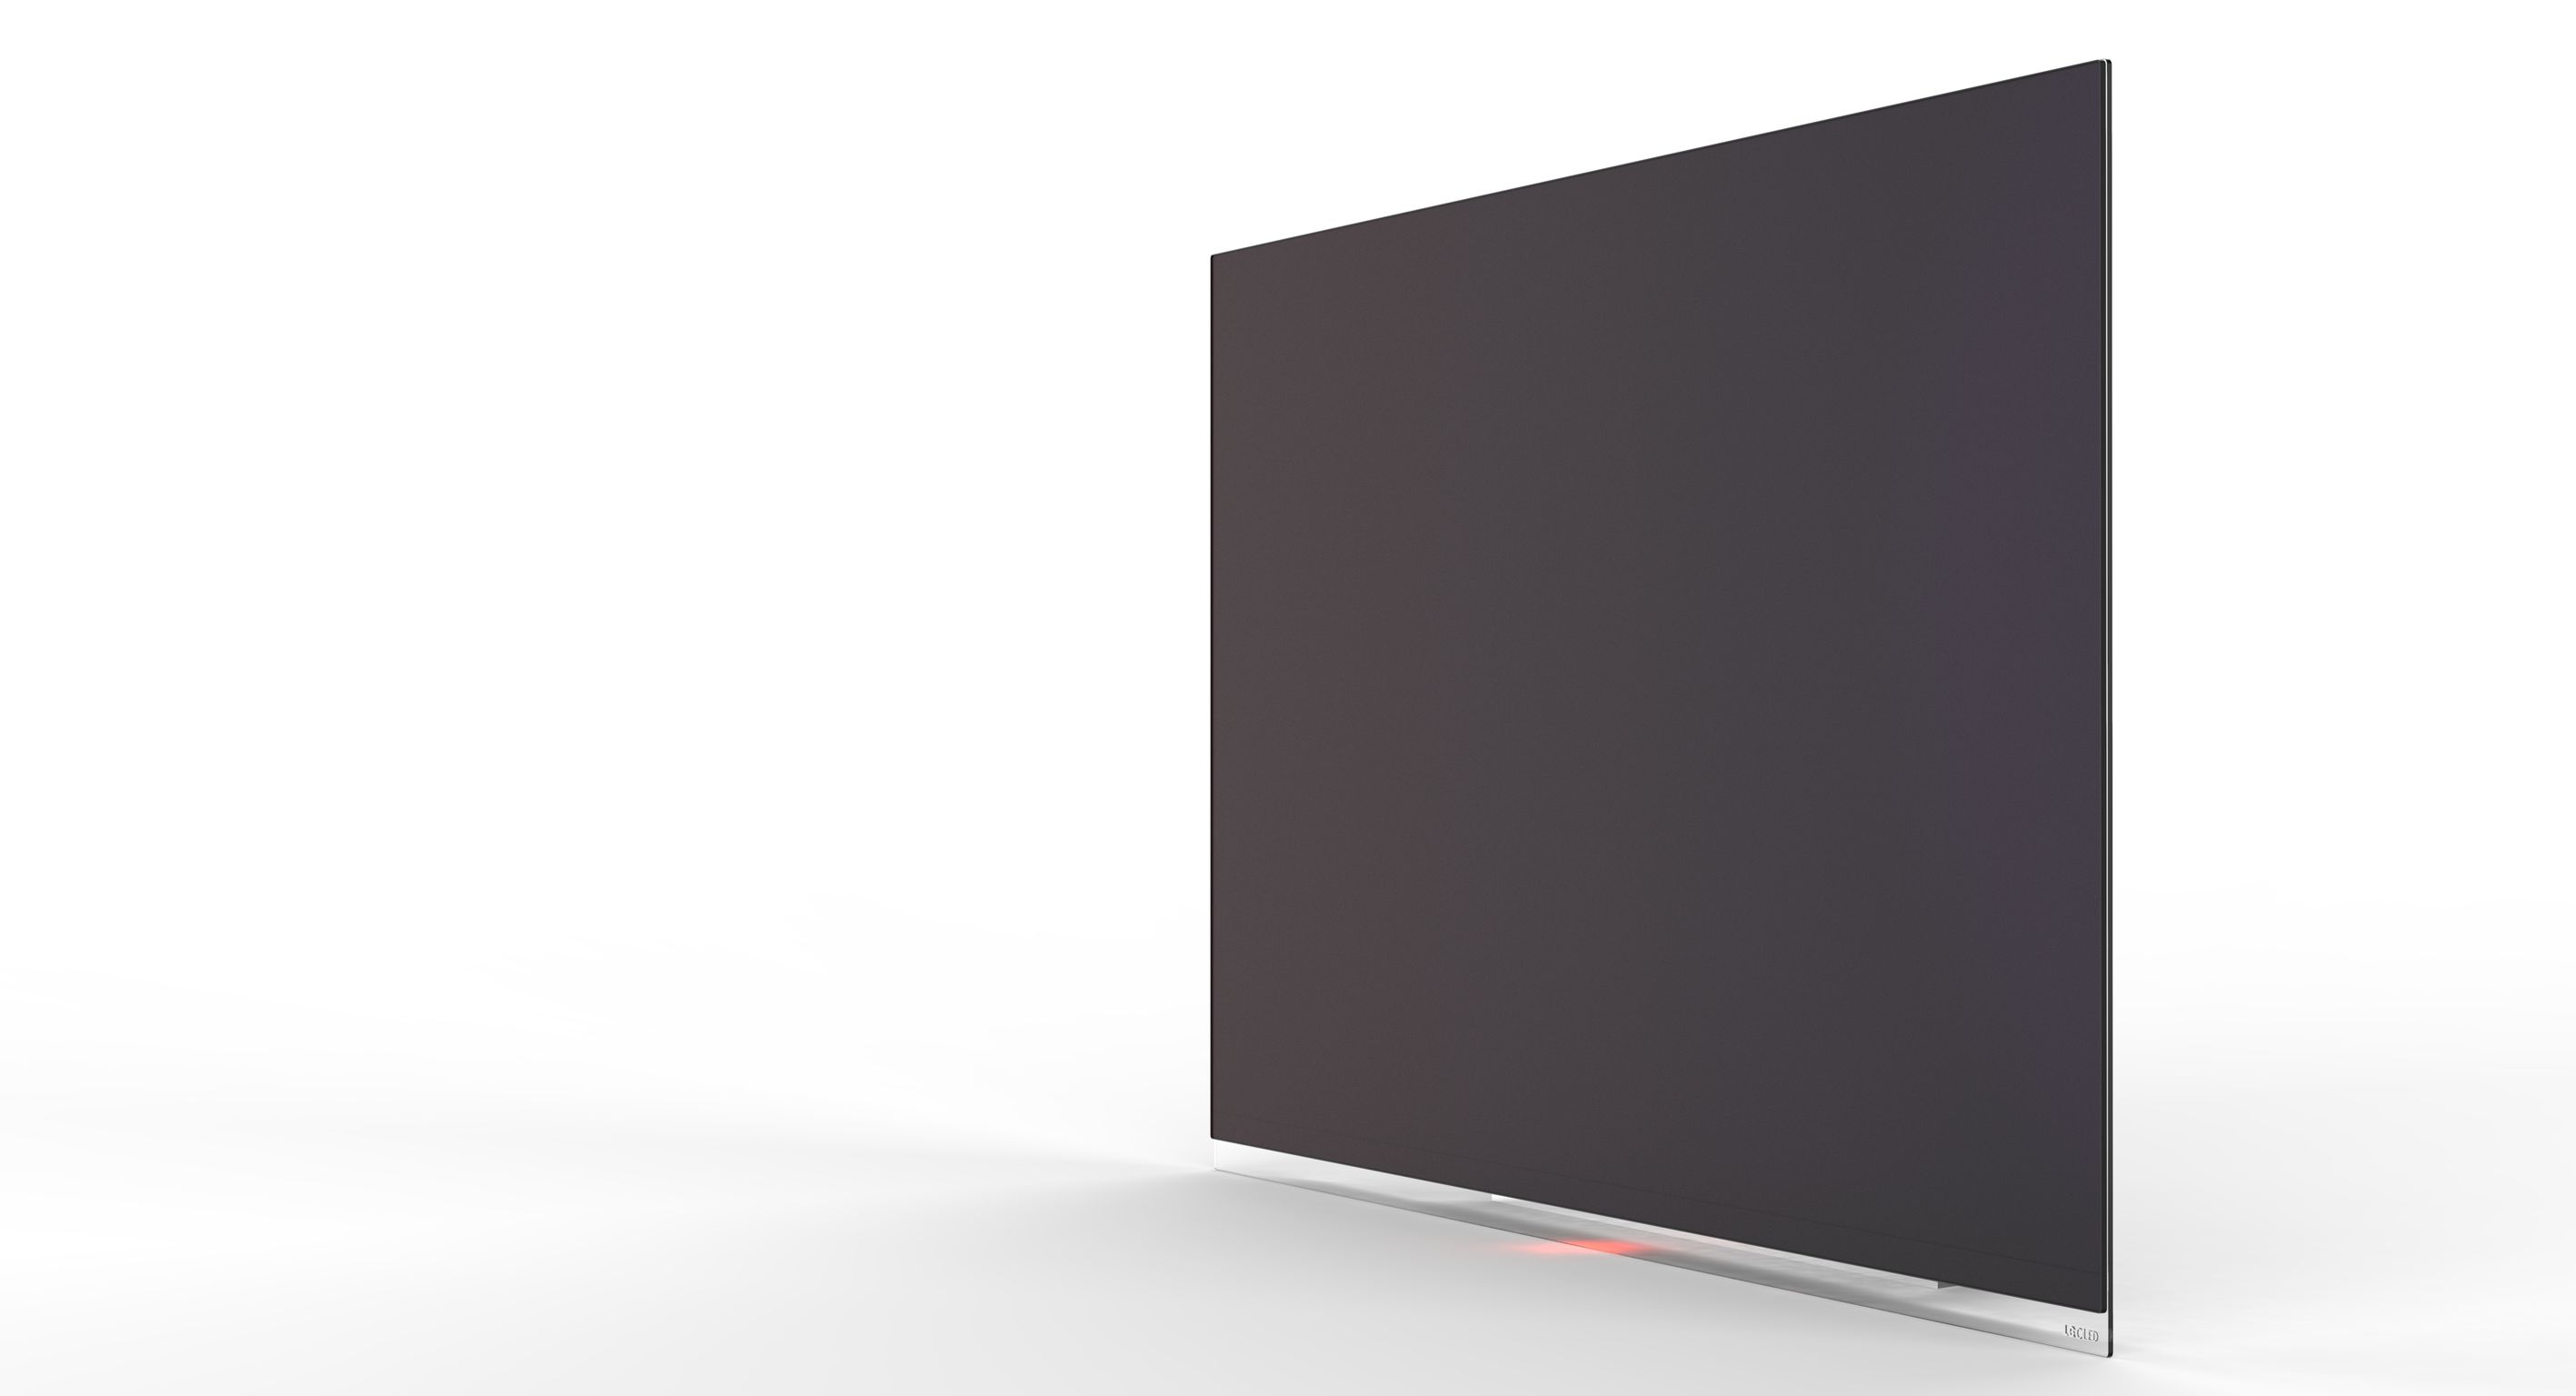 LG OLED TV (E9)